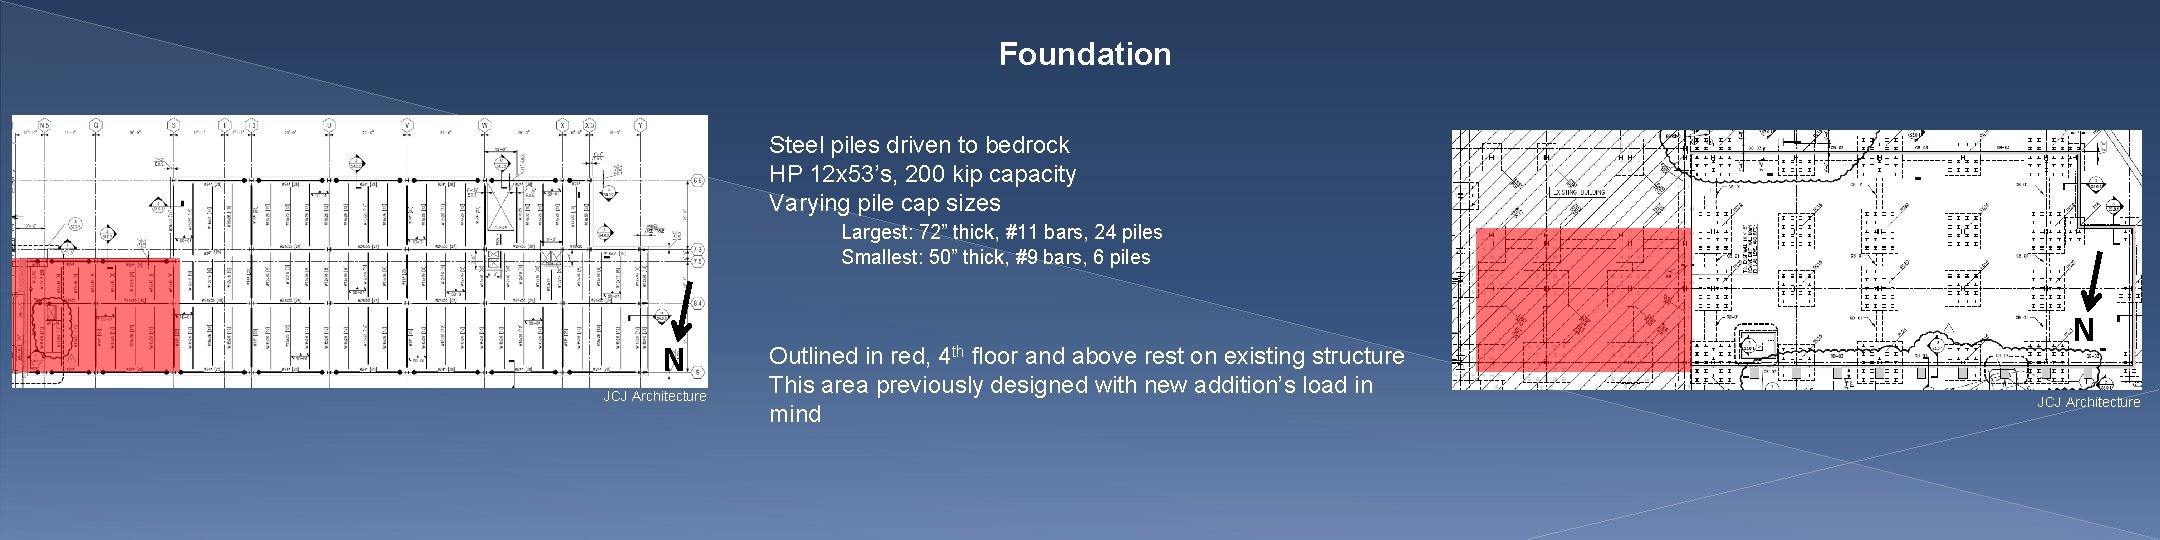 Foundation Steel piles driven to bedrock HP 12 x 53’s, 200 kip capacity Varying